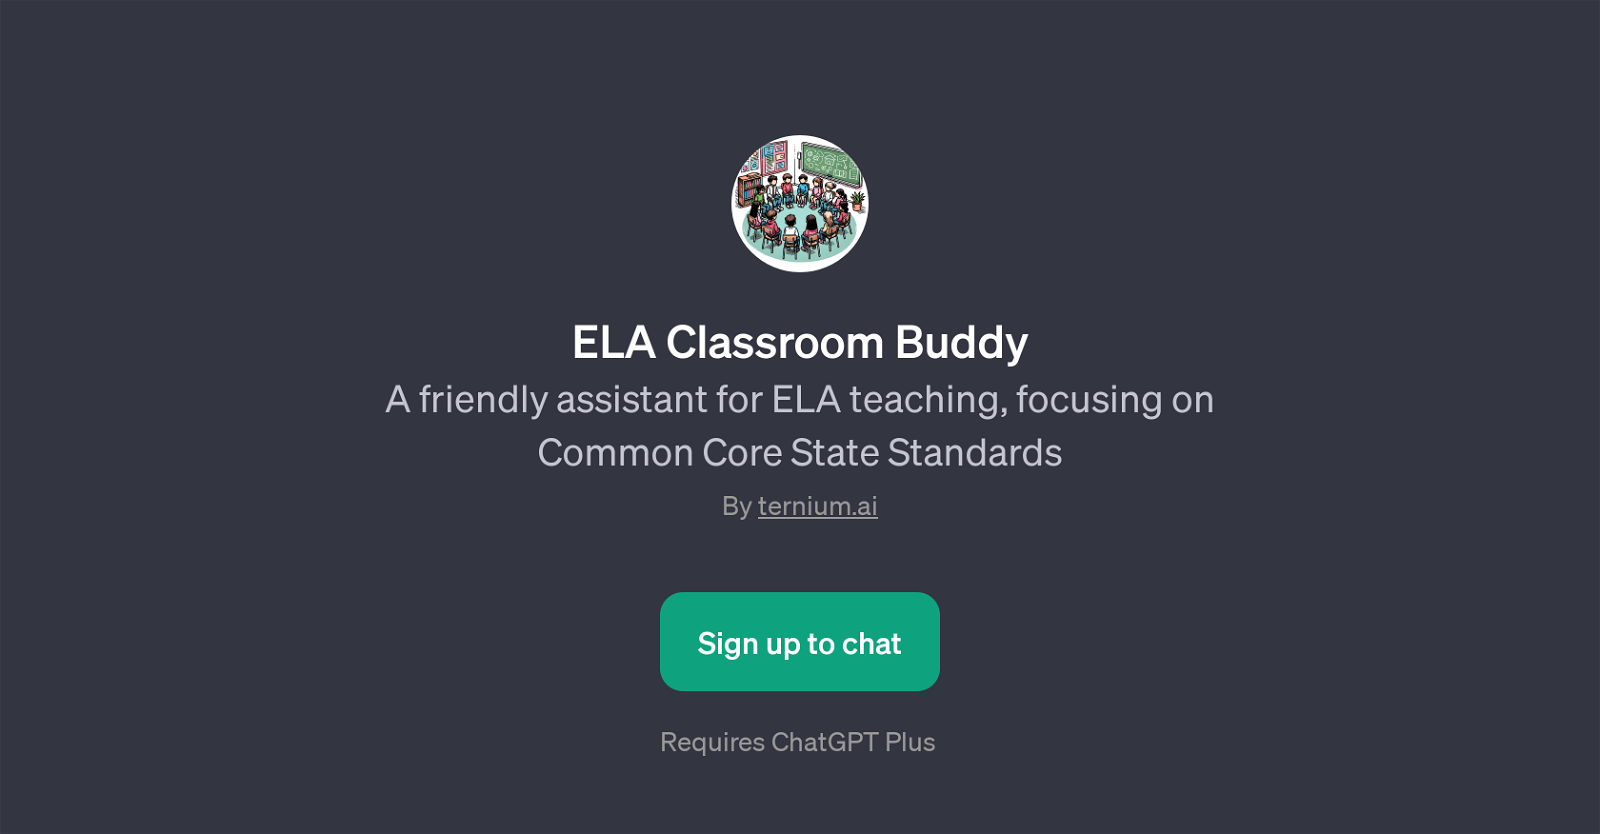 ELA Classroom Buddy website